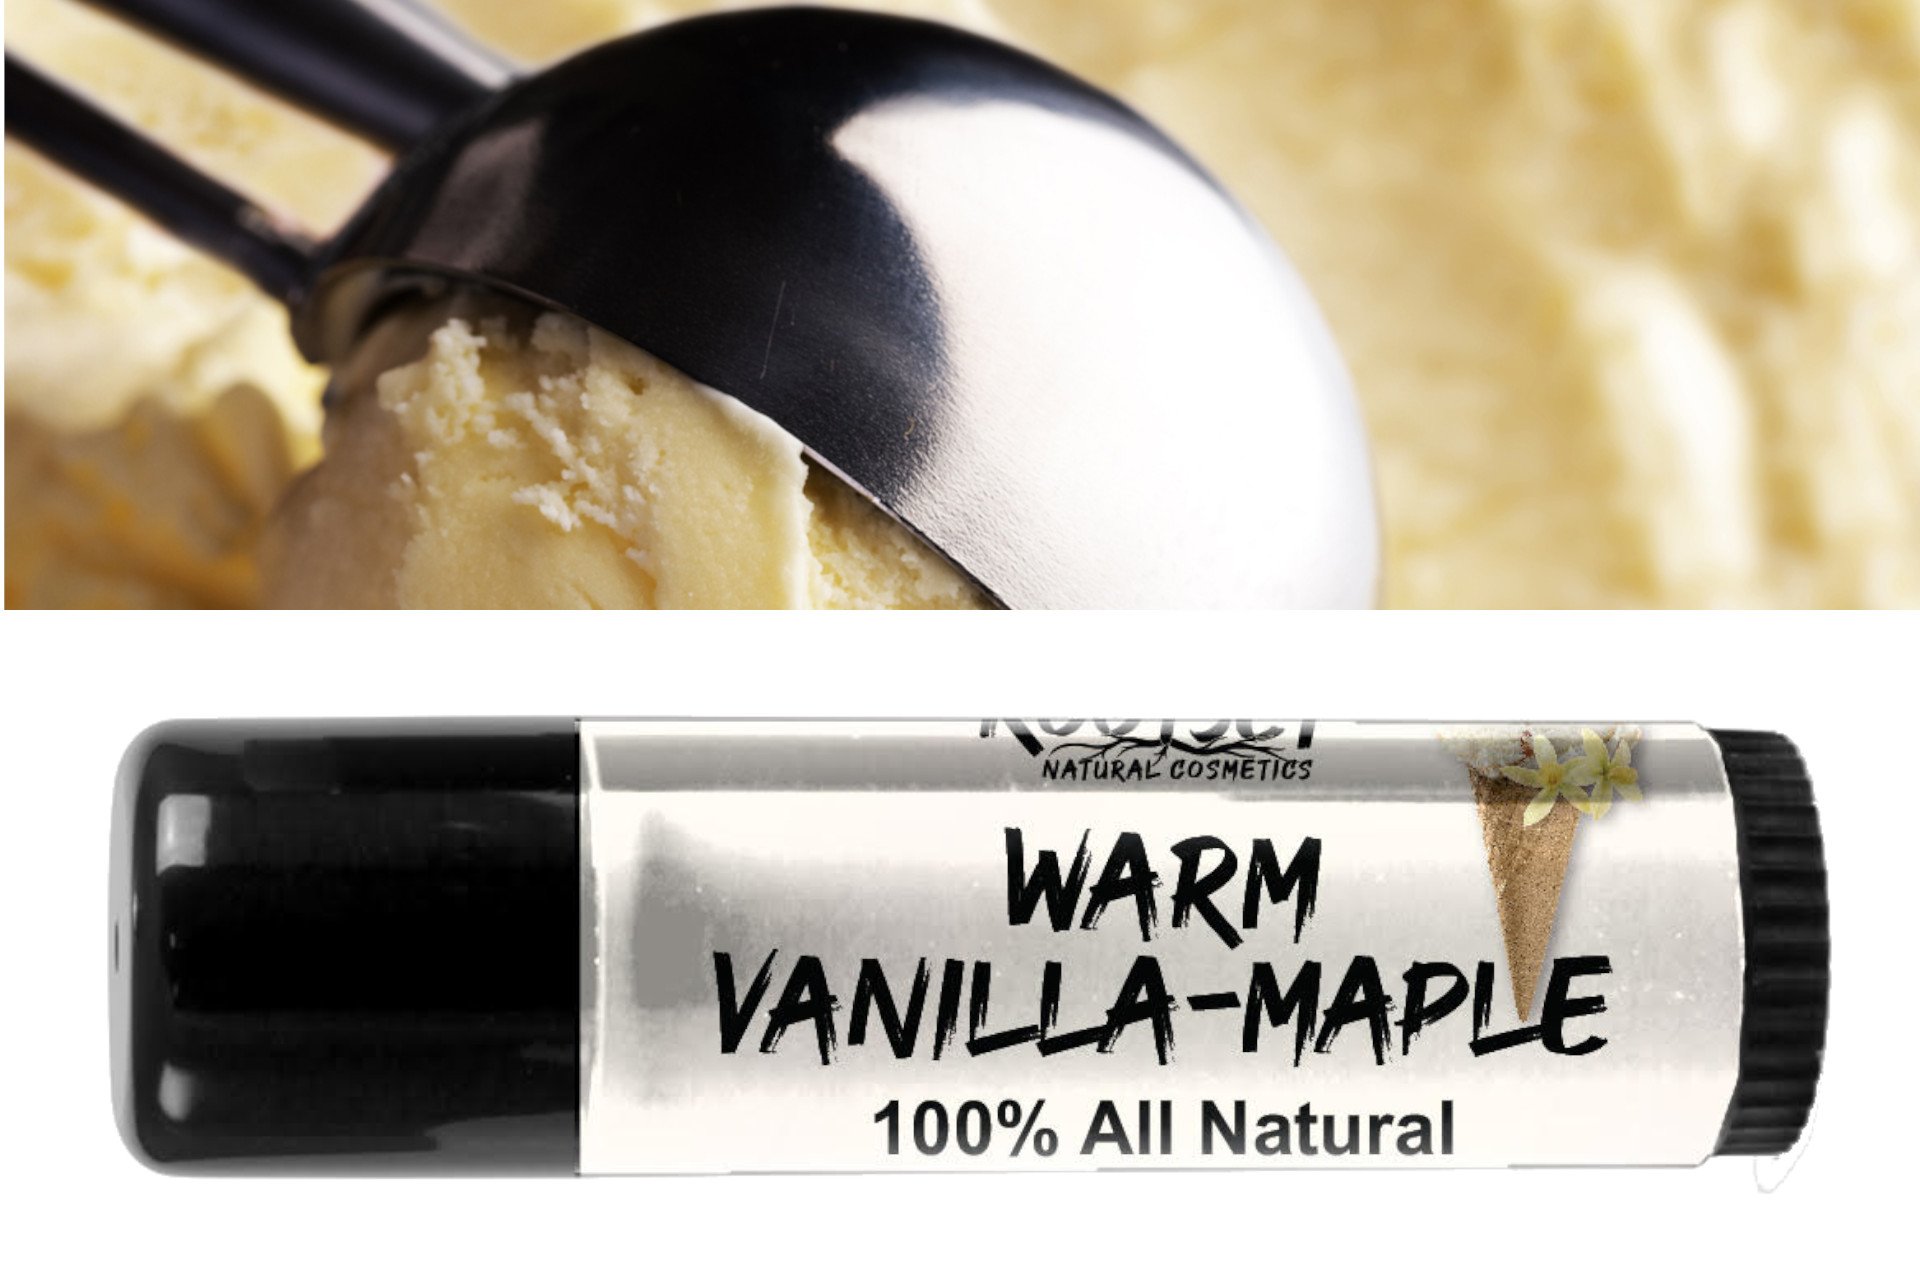 Warm Vanilla-Maple Jumbo 100% All Natural Lip & Body Balm.jpg